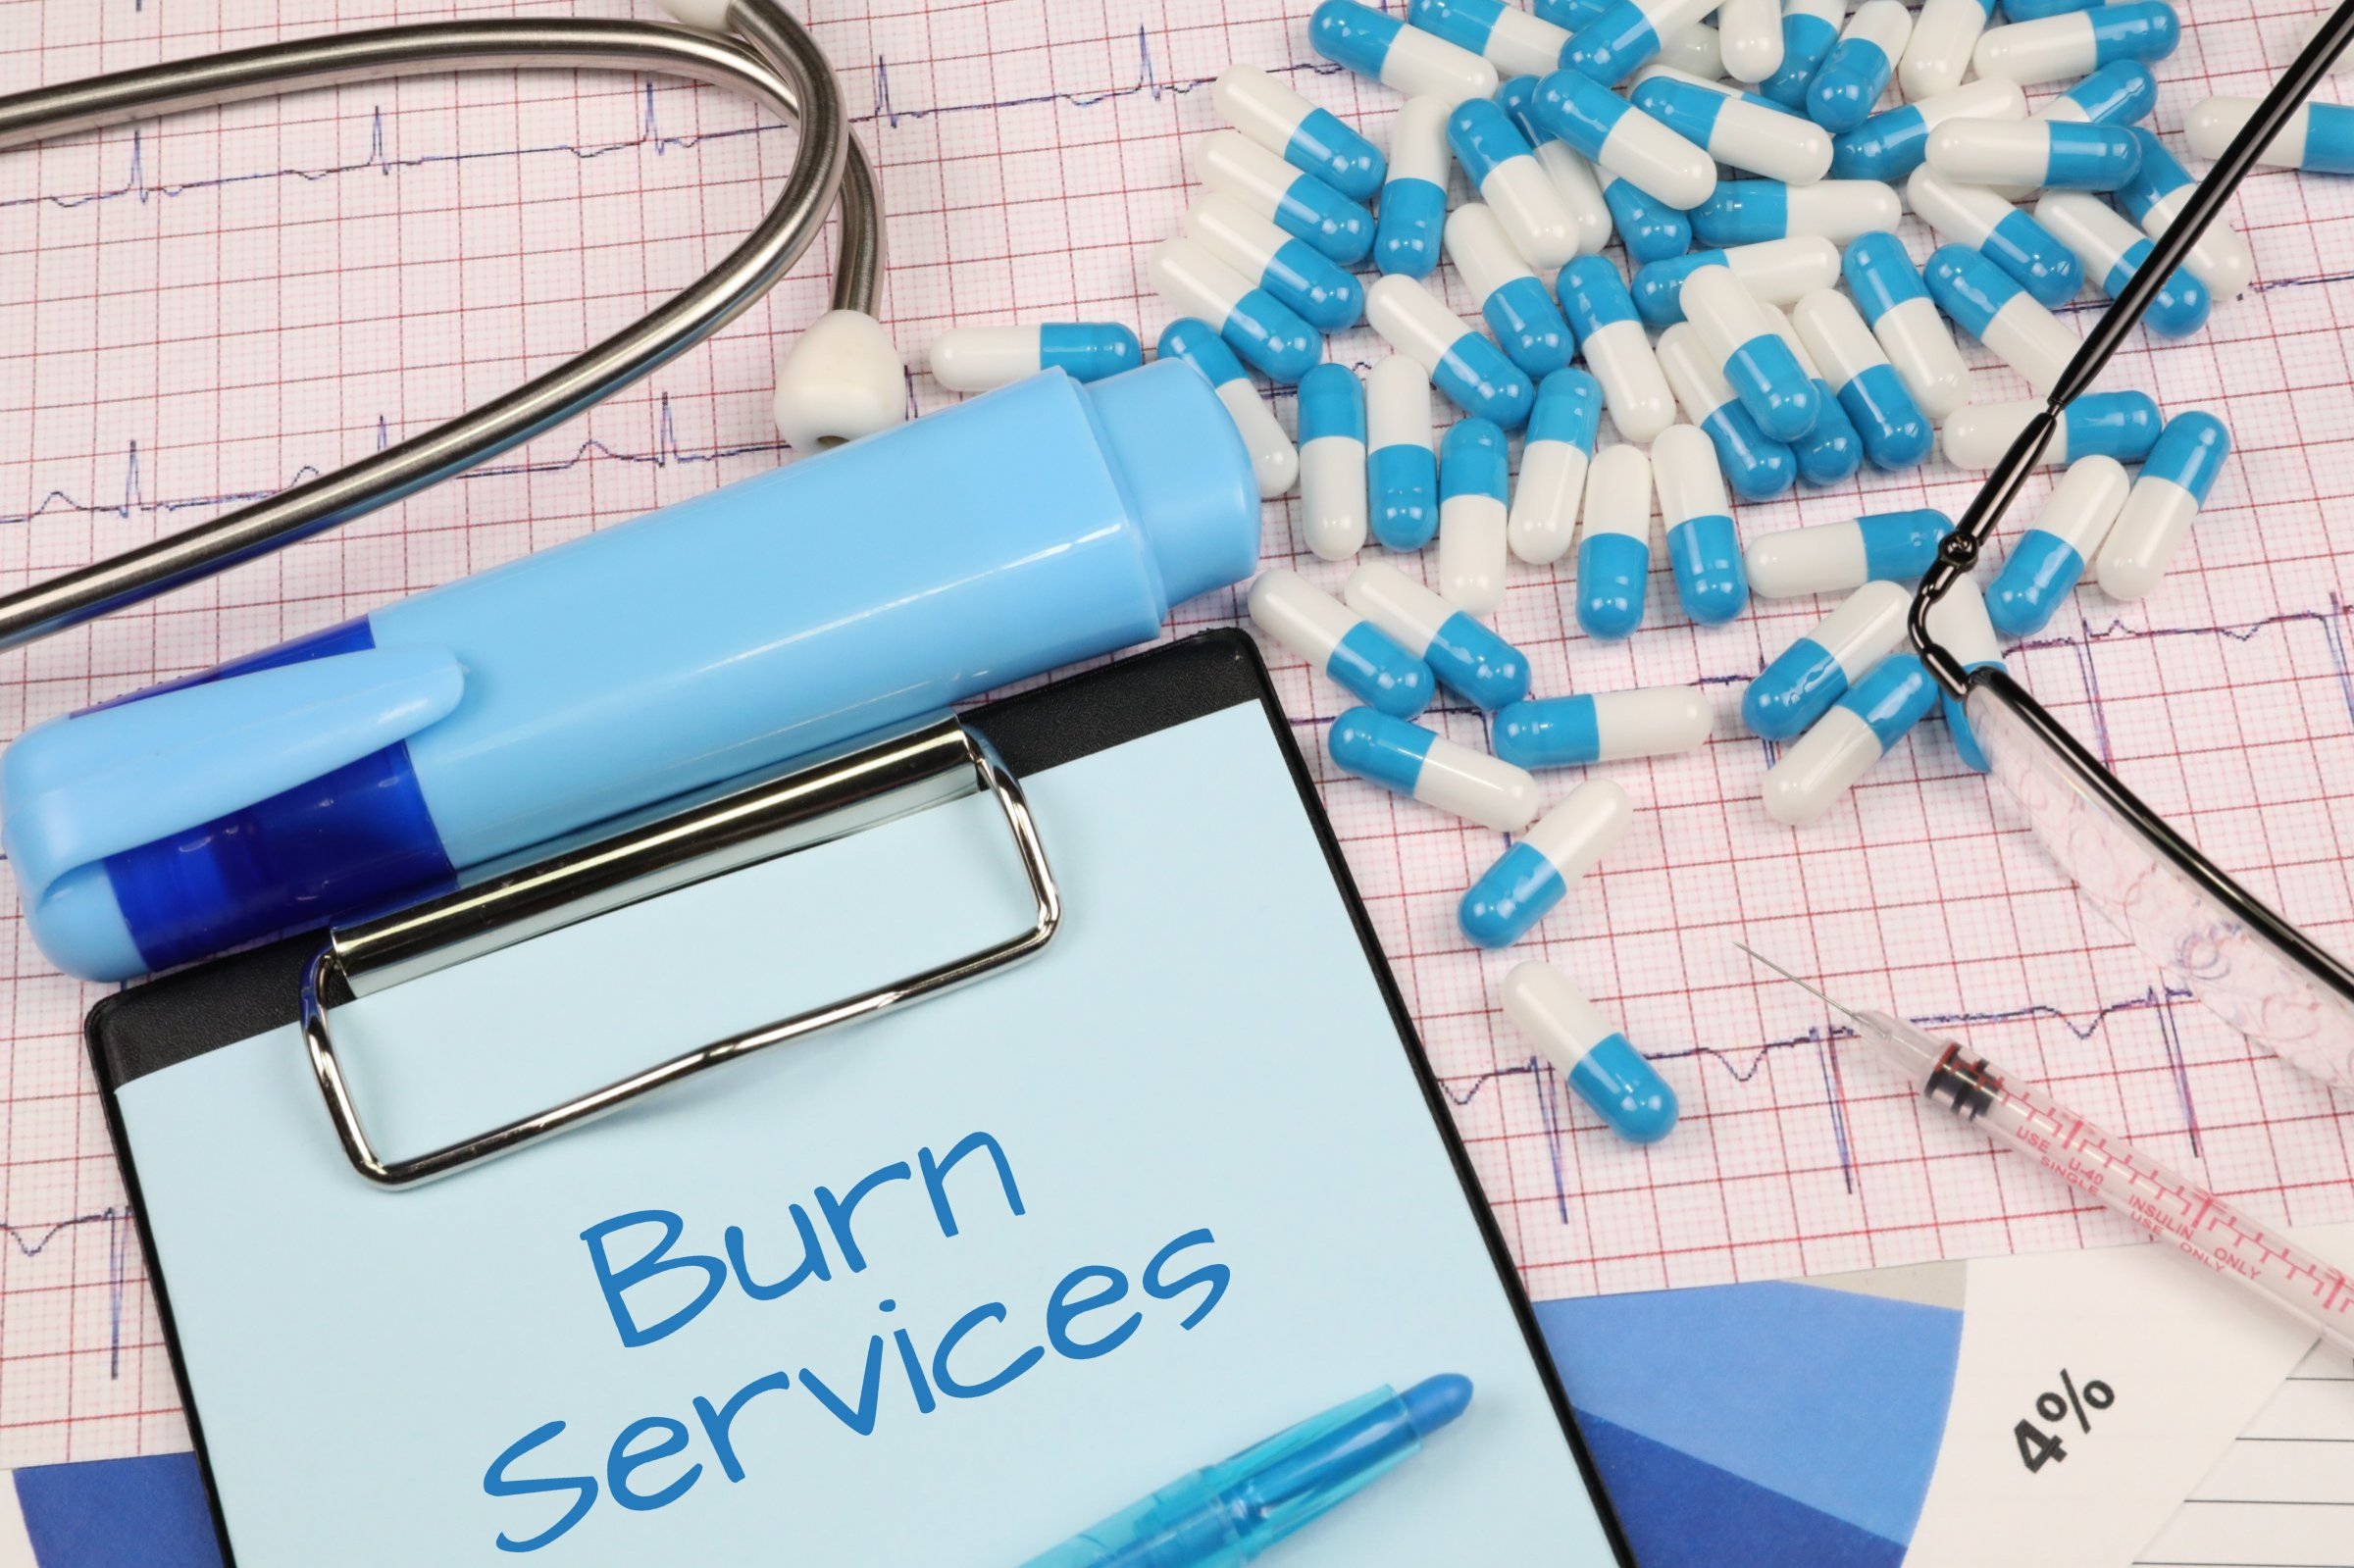 burn services